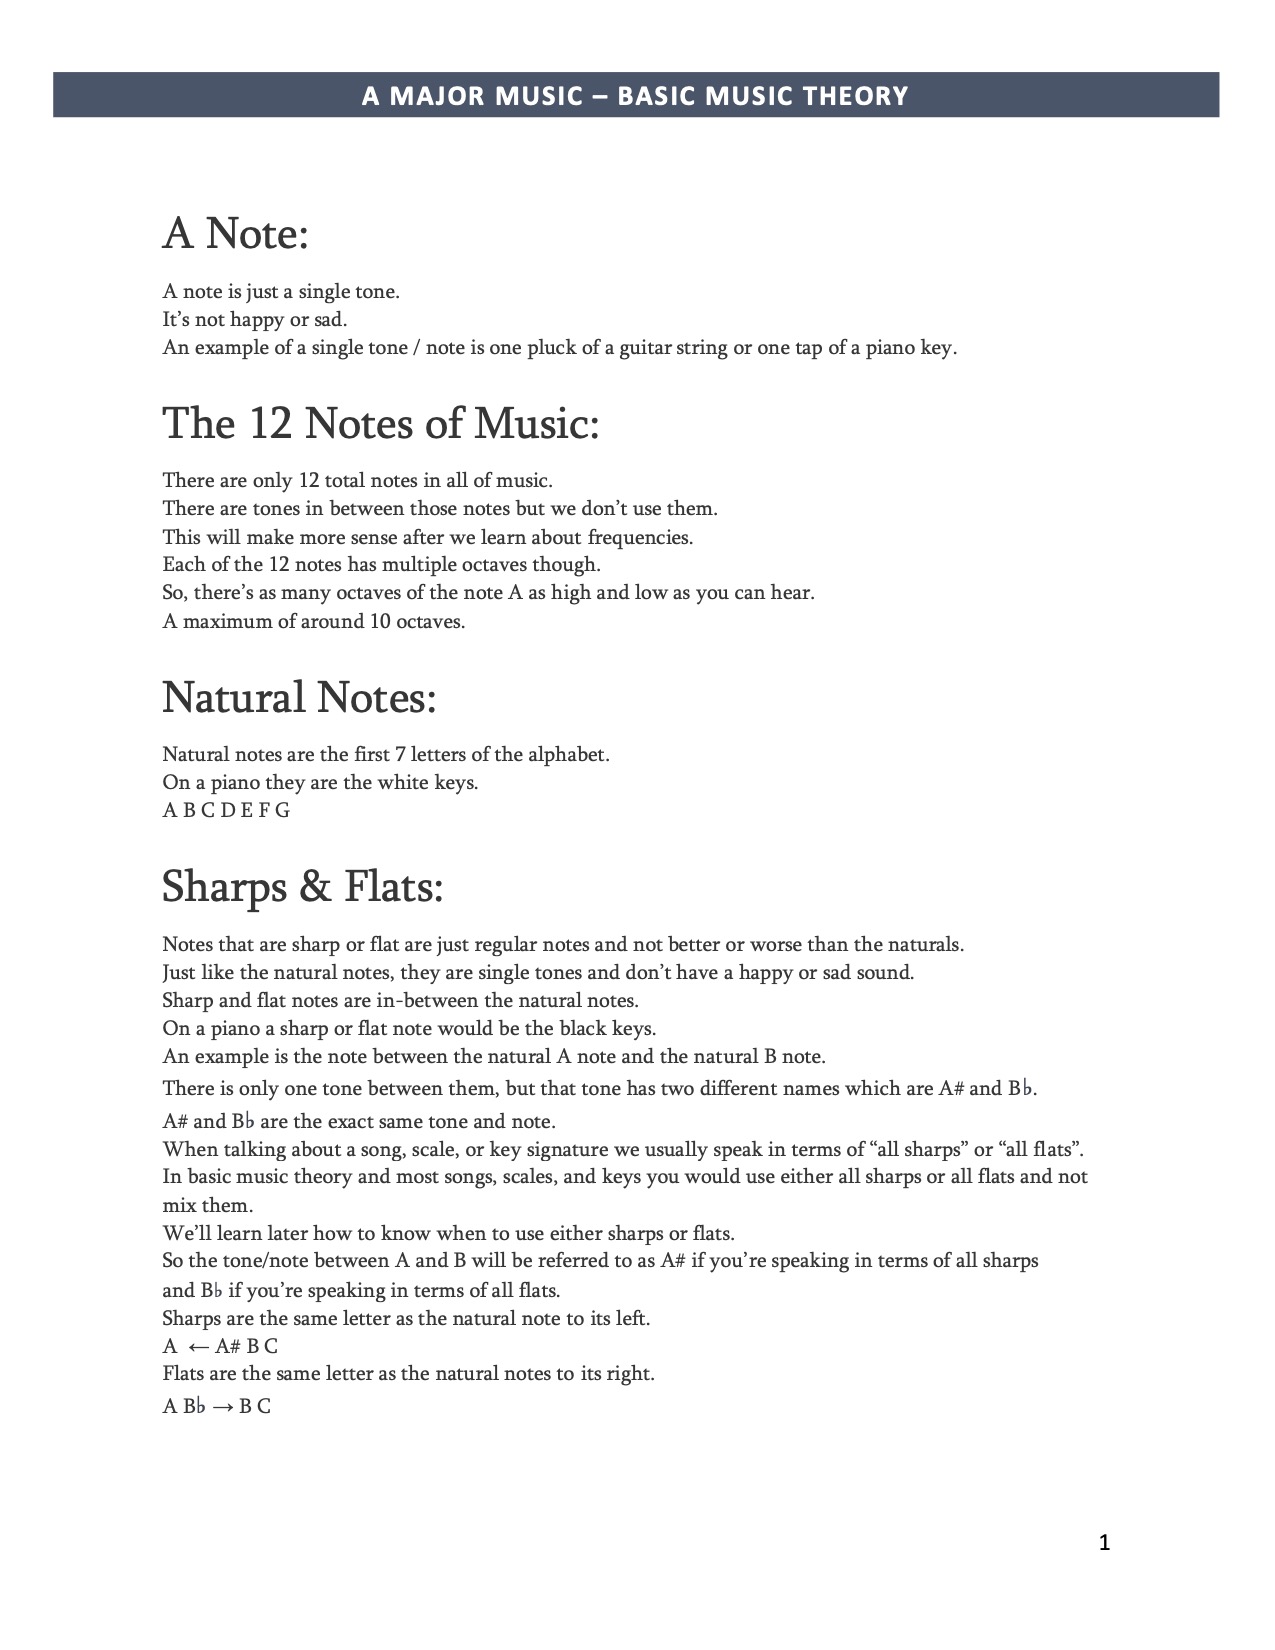 Music Theory Basics Packet A Major Music Pdf